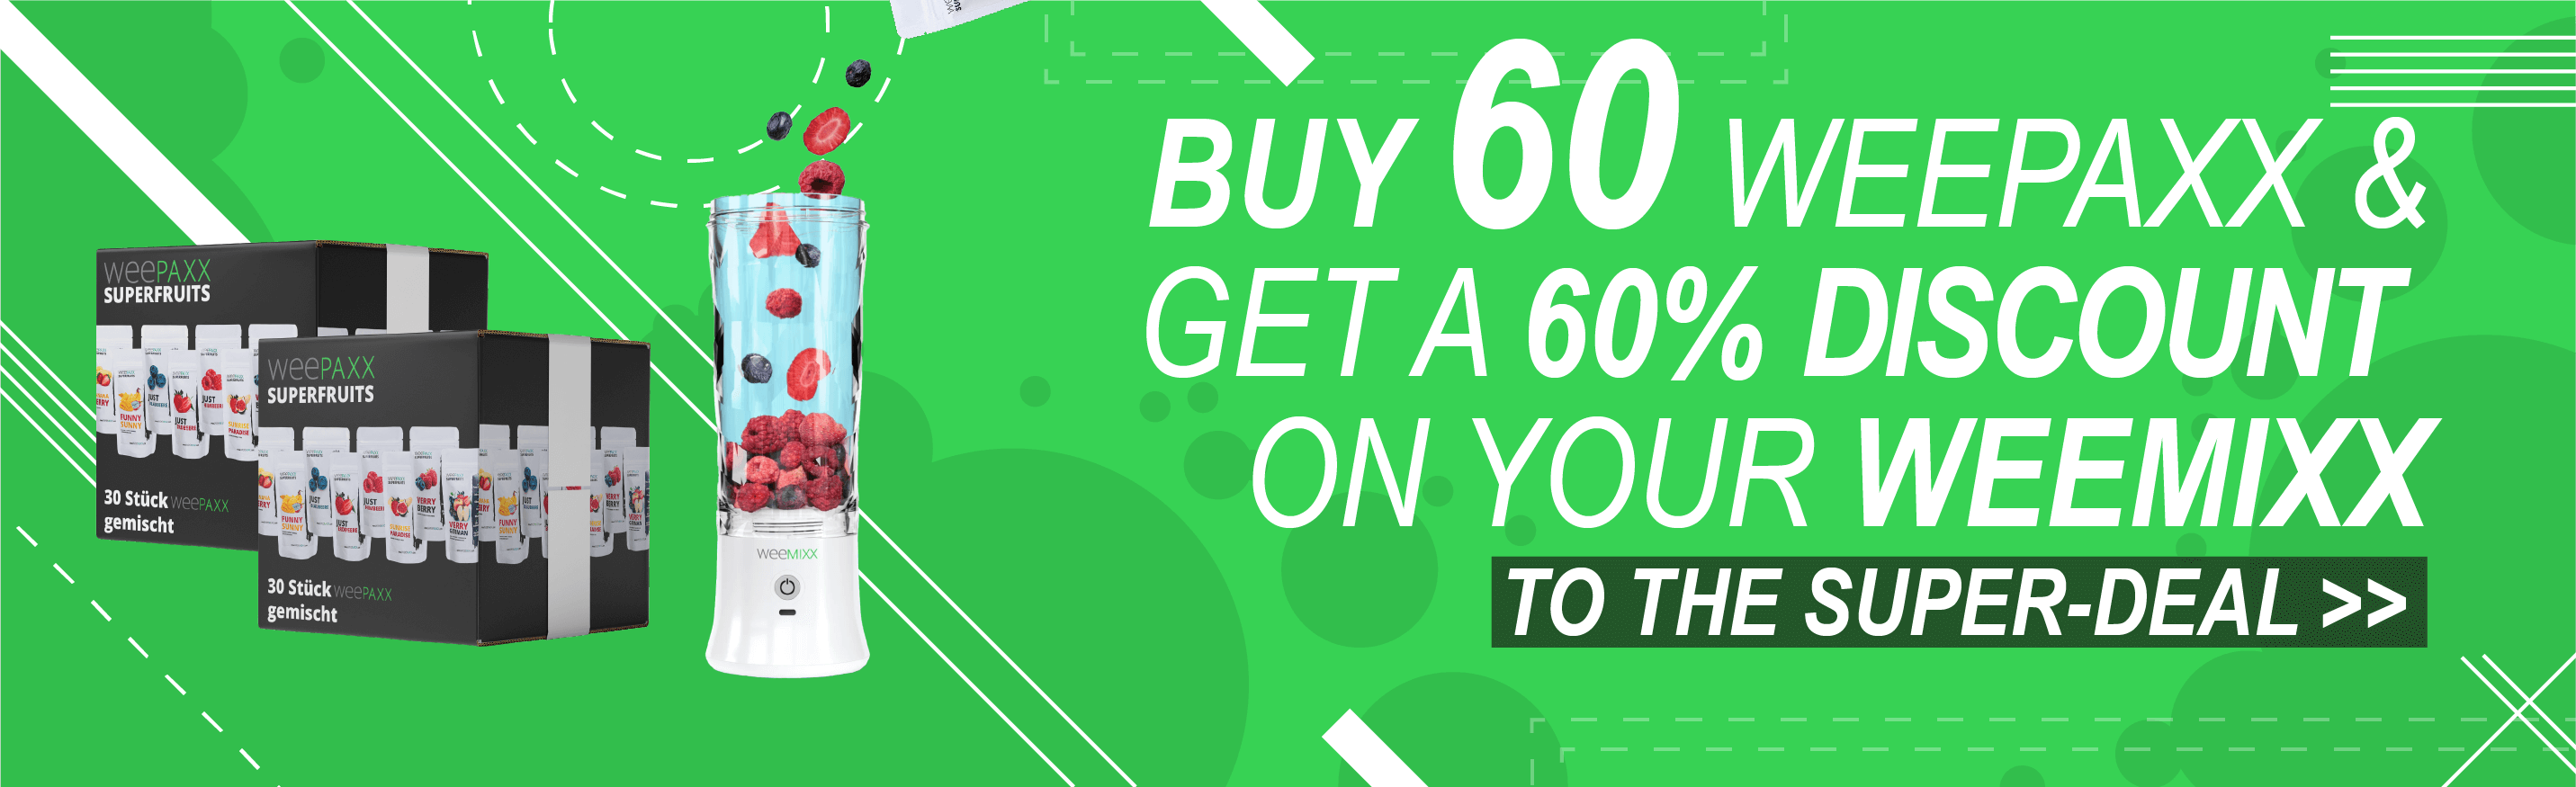 Save 60% on your weemixx